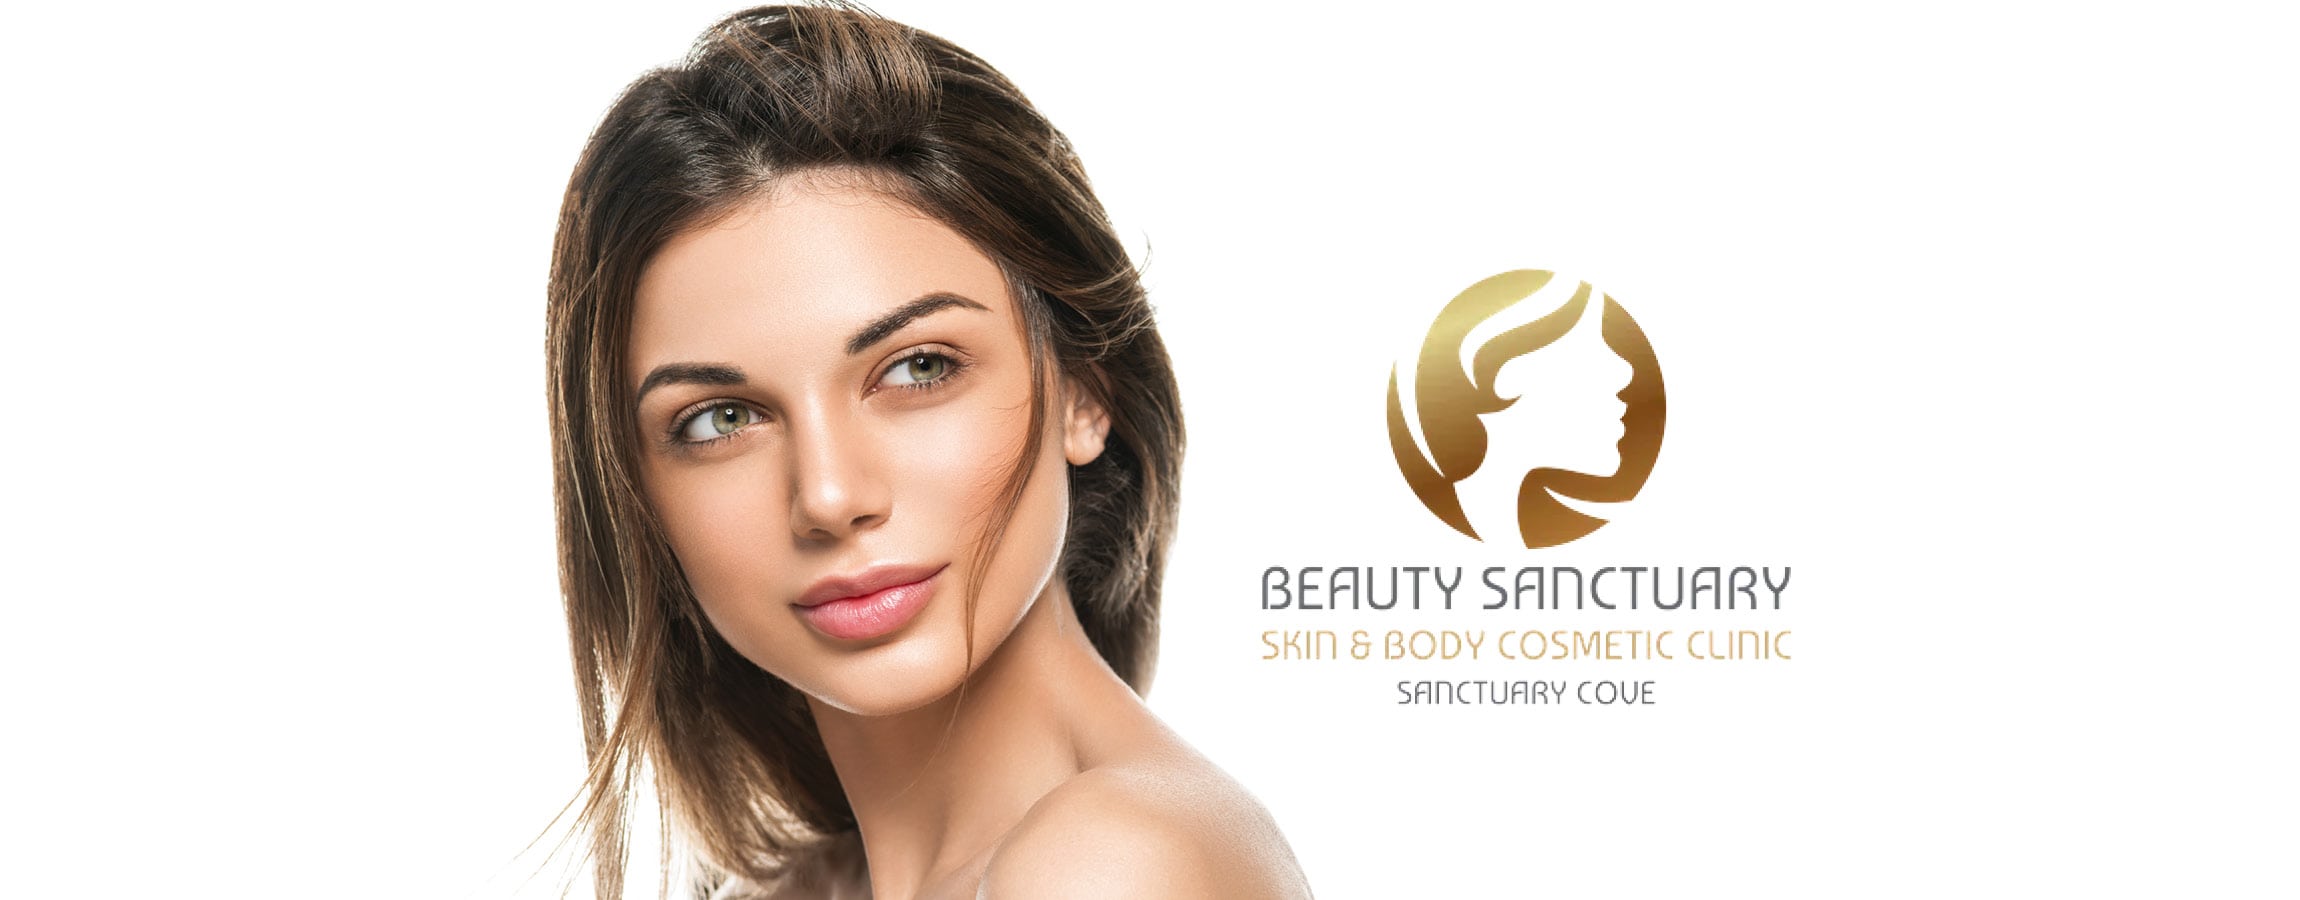 Elite-Skin-Beauty-Sanctuary-web-0-min